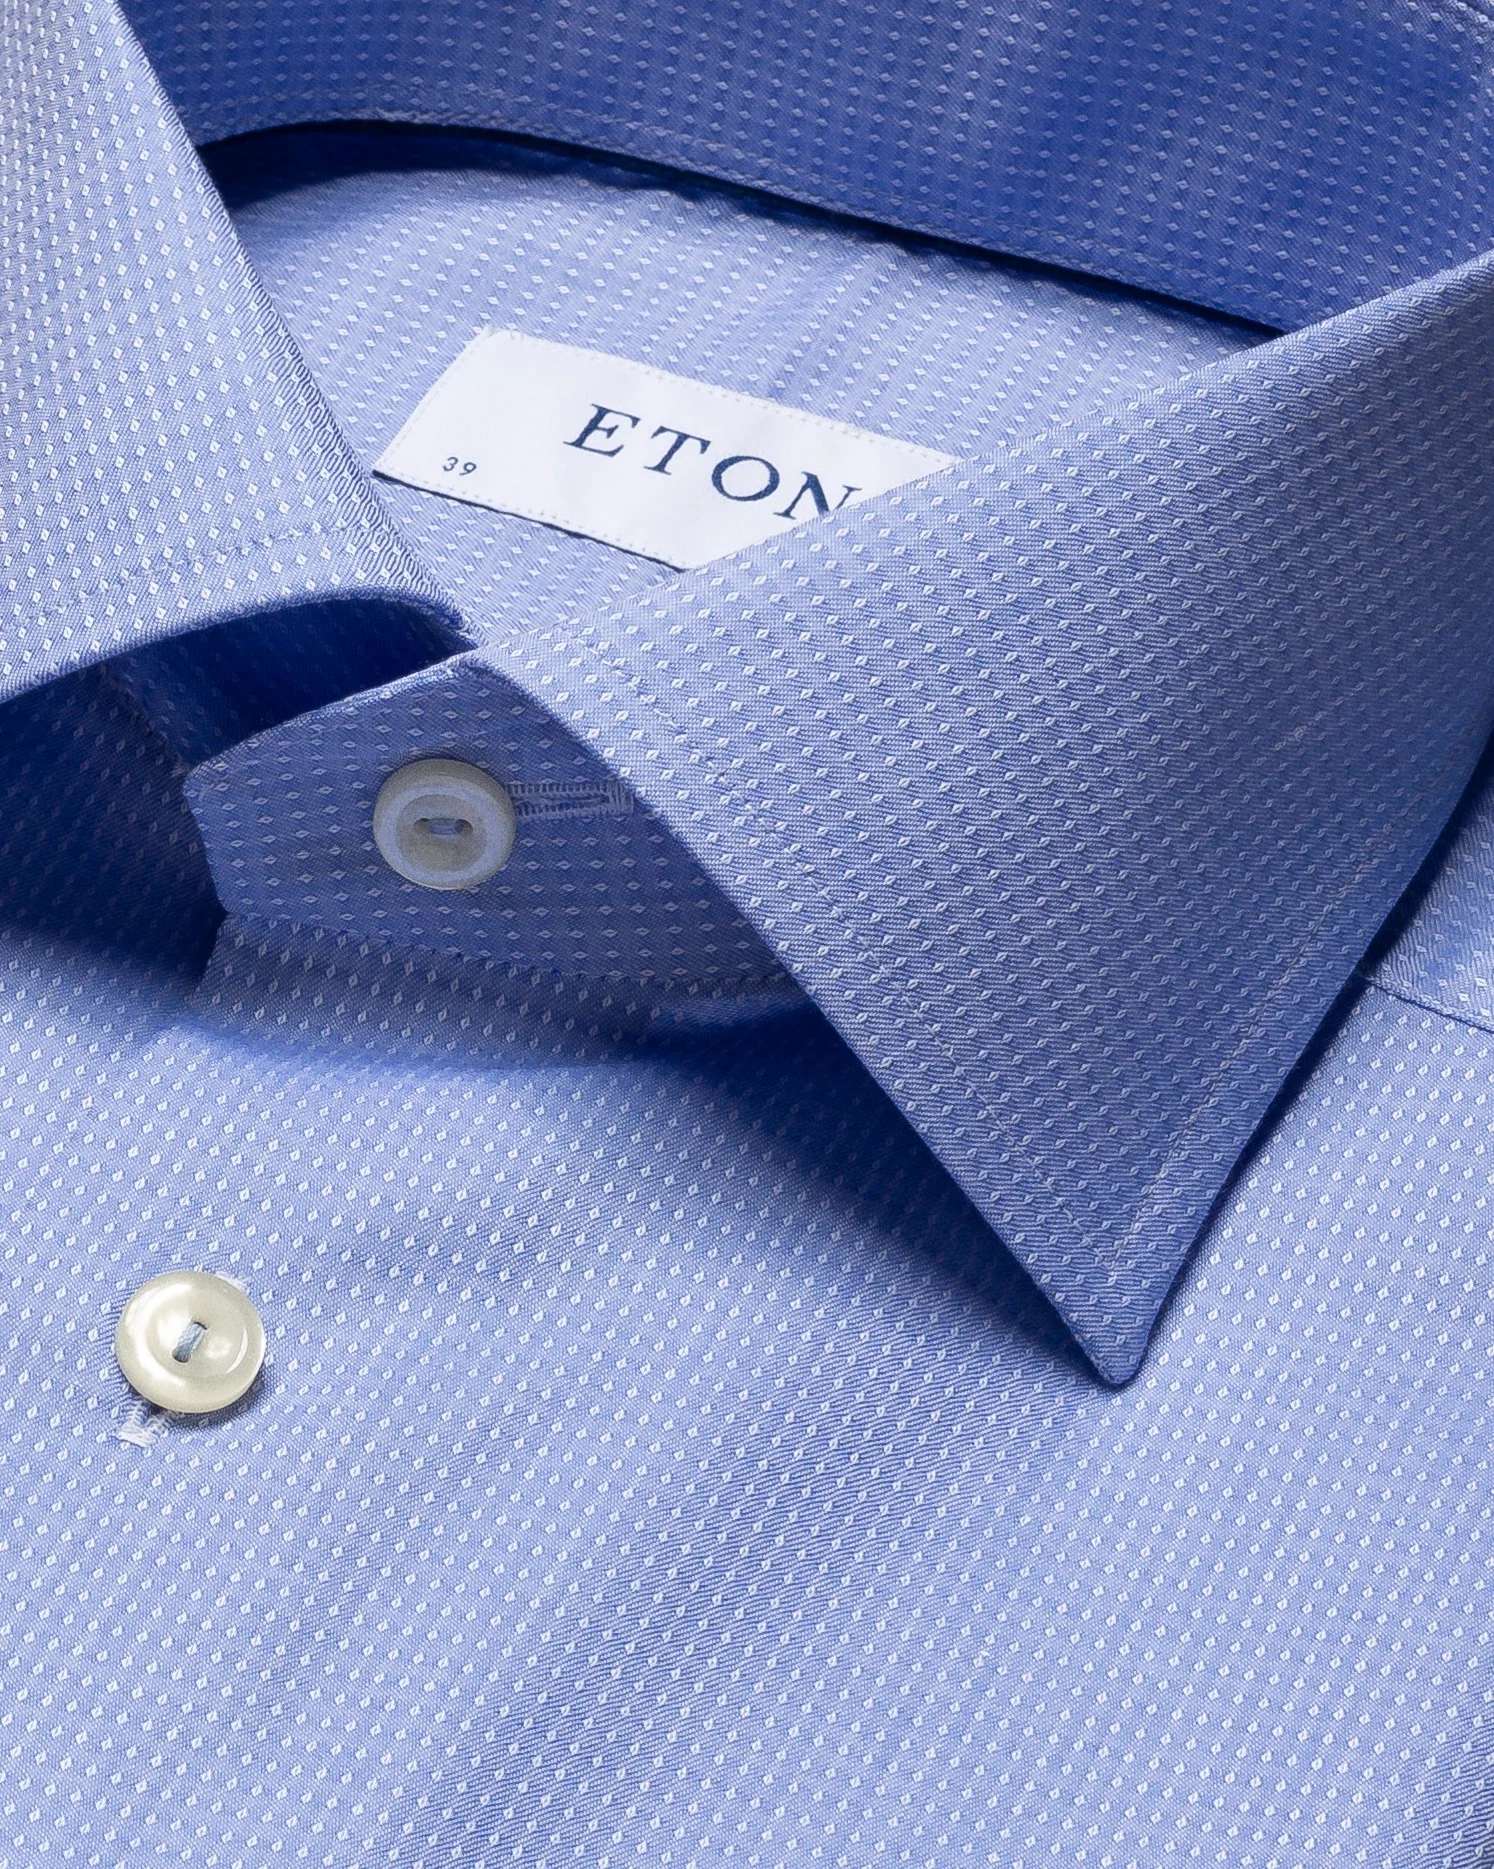 Eton - mid blue pin dot twill shirt